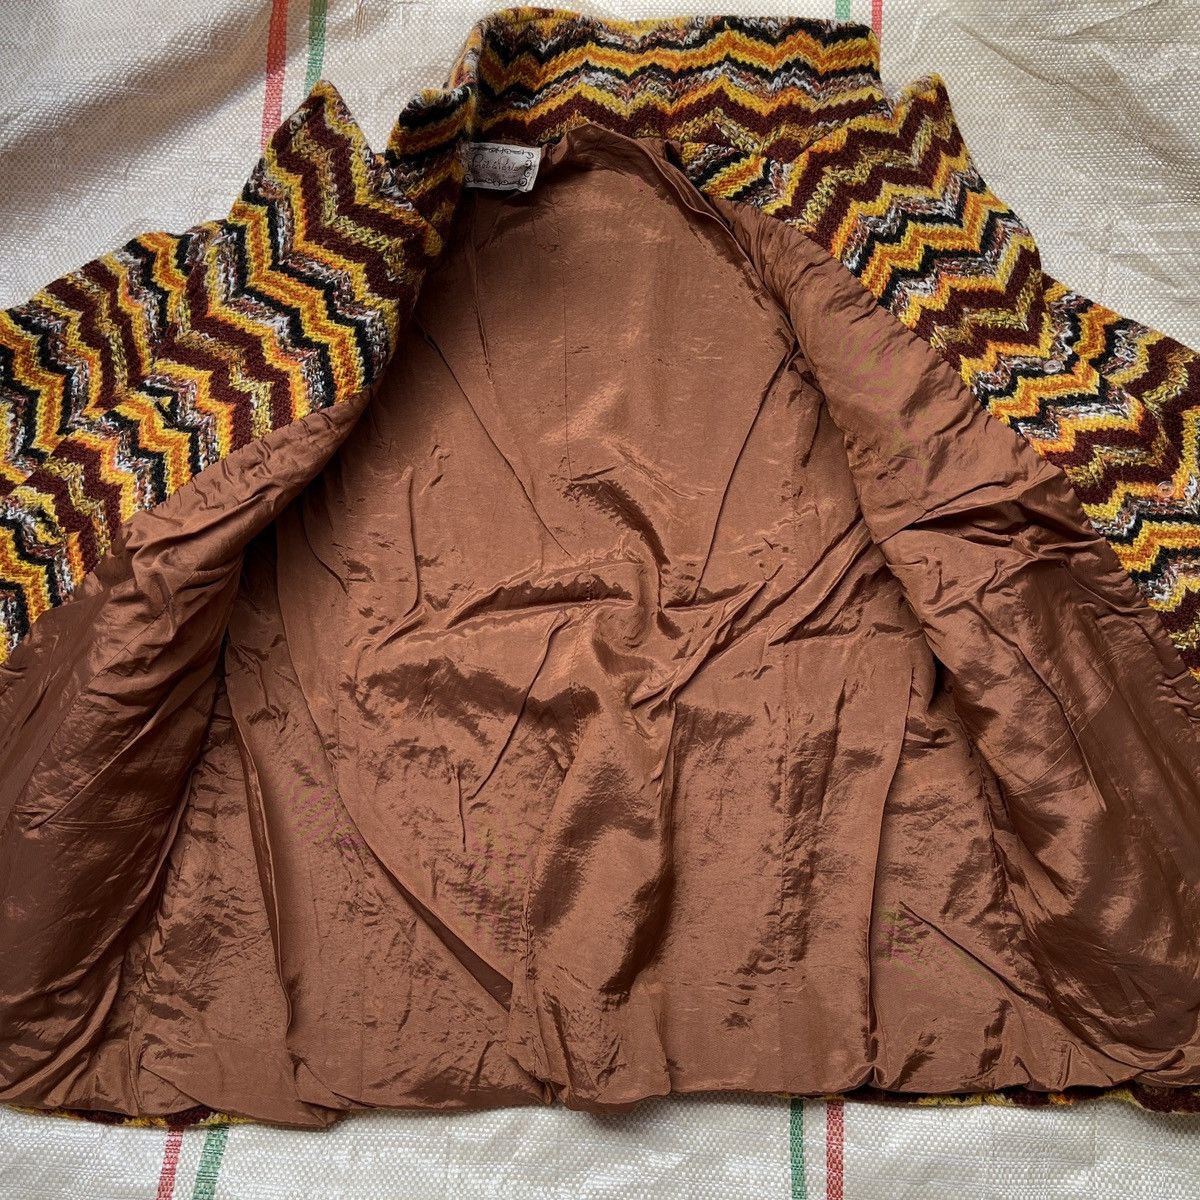 Vintage Pret & Porter Knit Inspired By Coogi Sweater Japan - 13